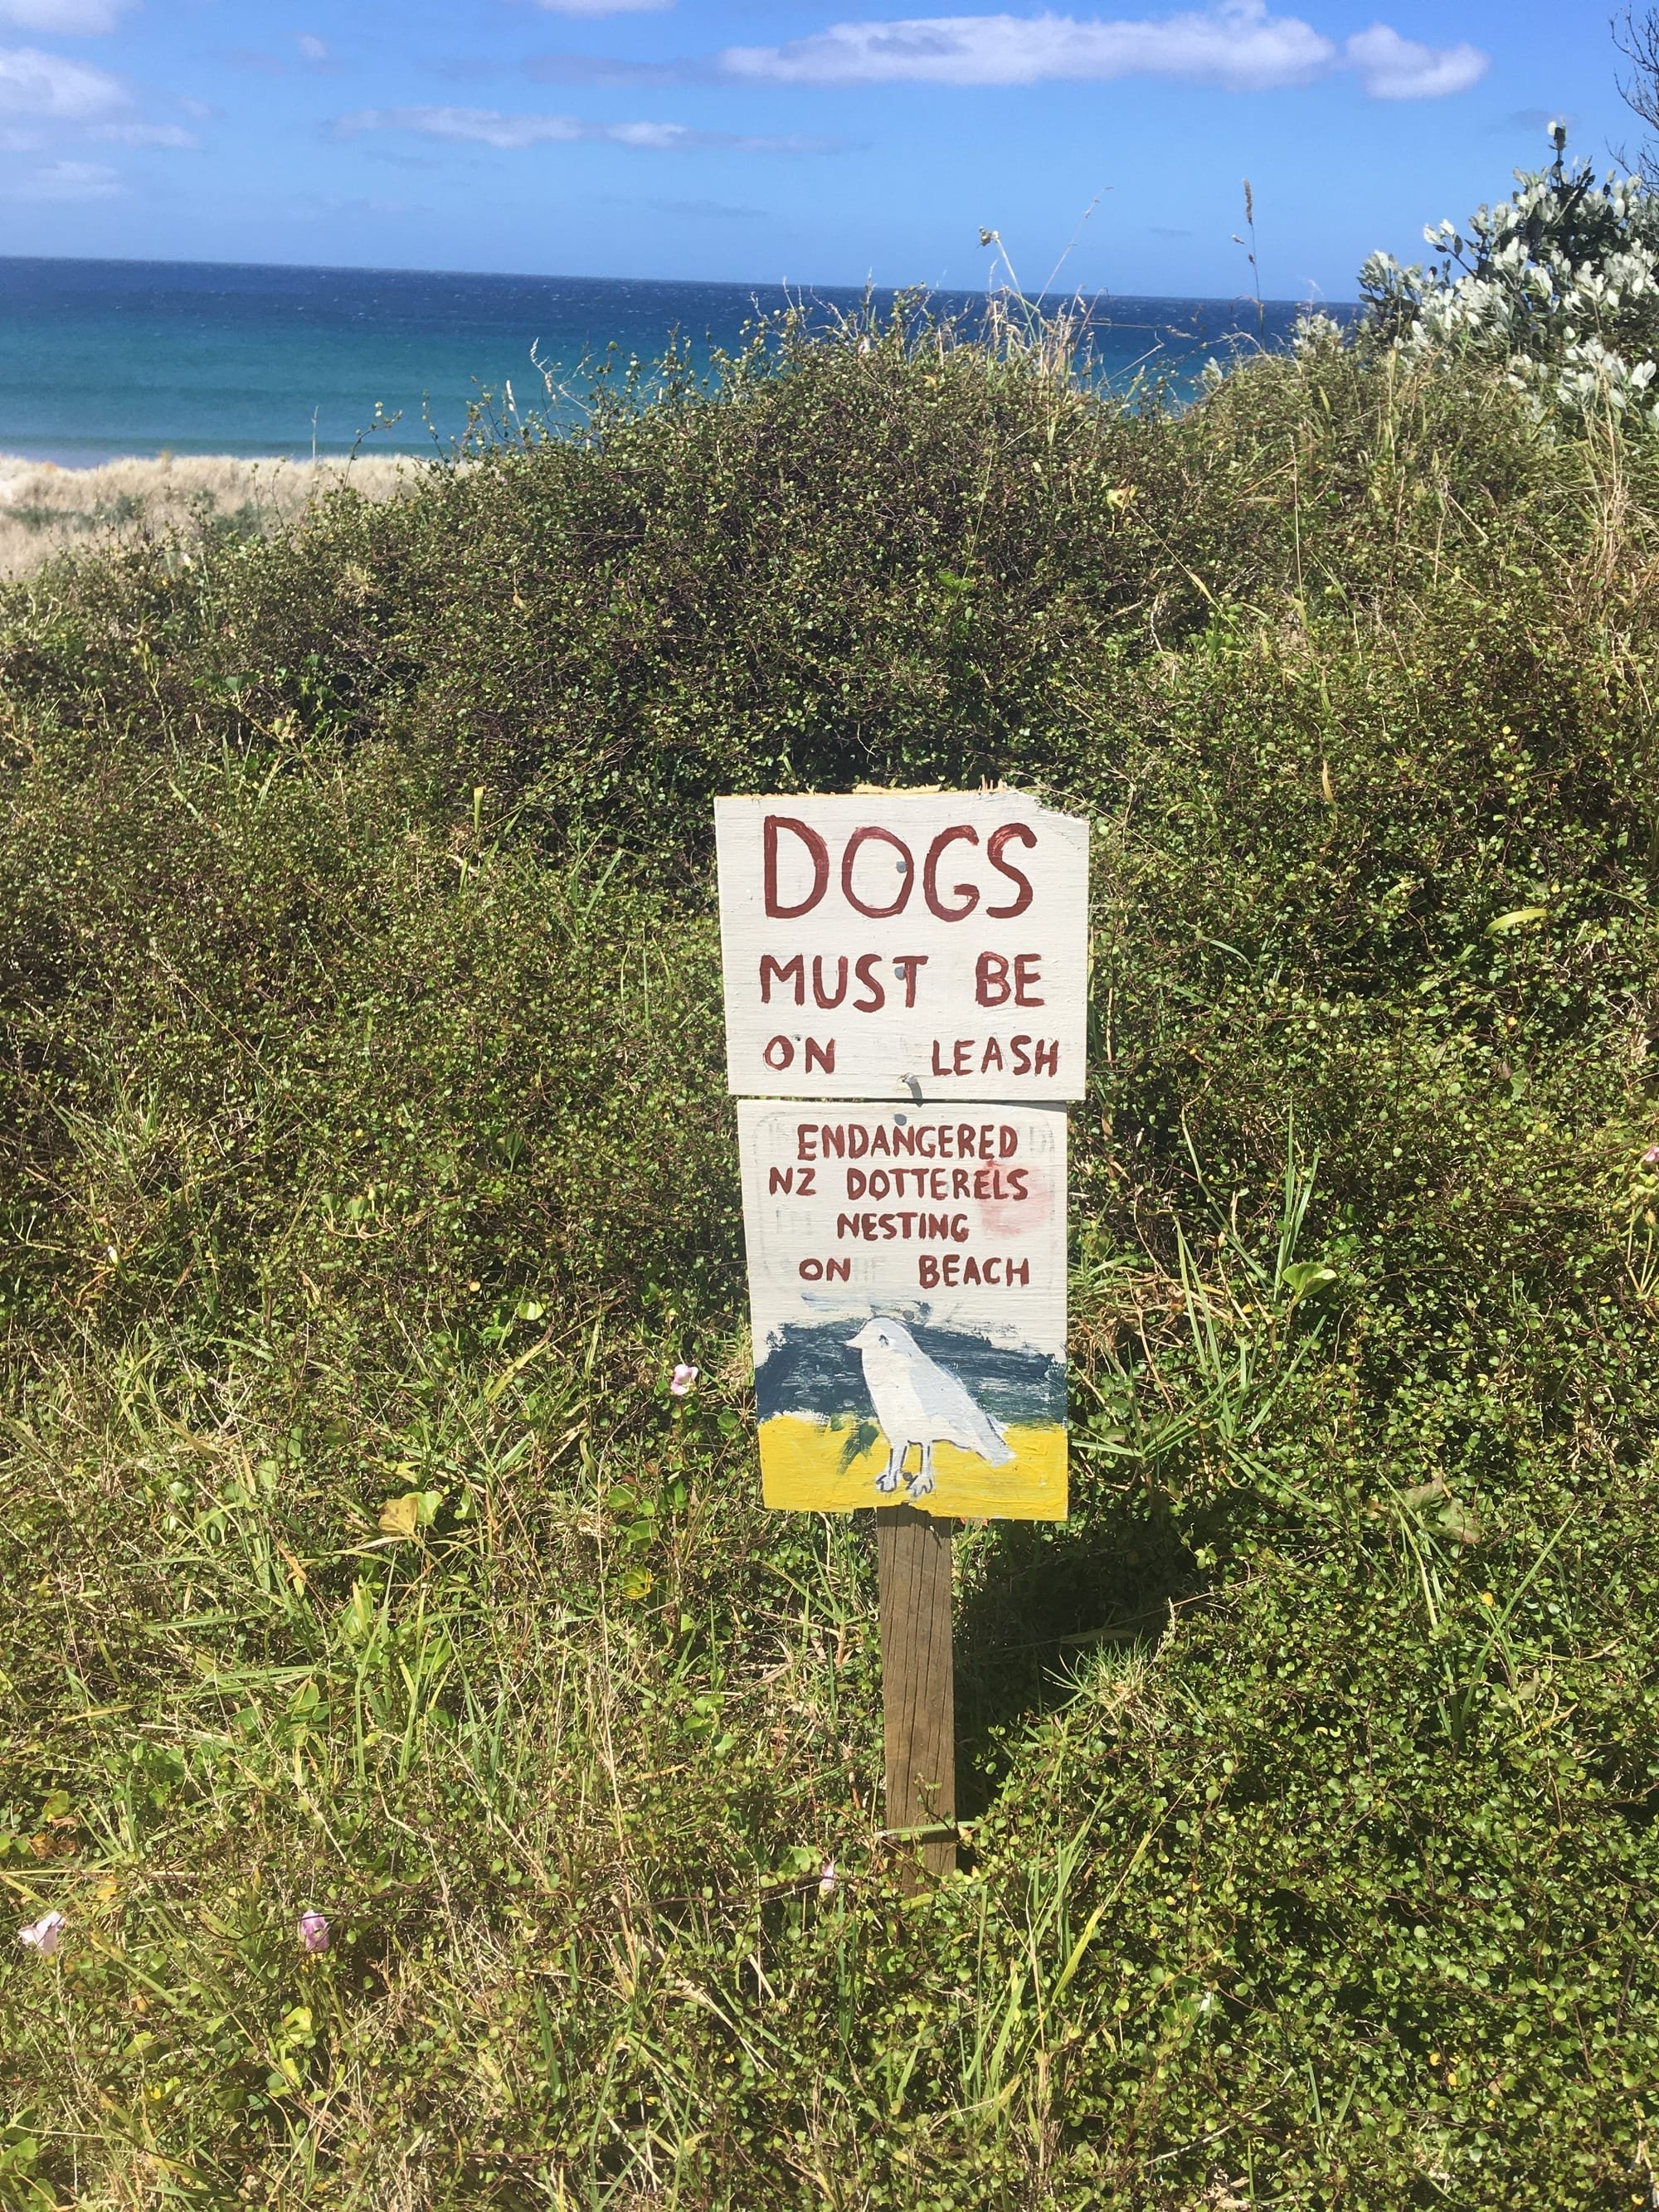 Please observe the dog bylaws to help the beach birds